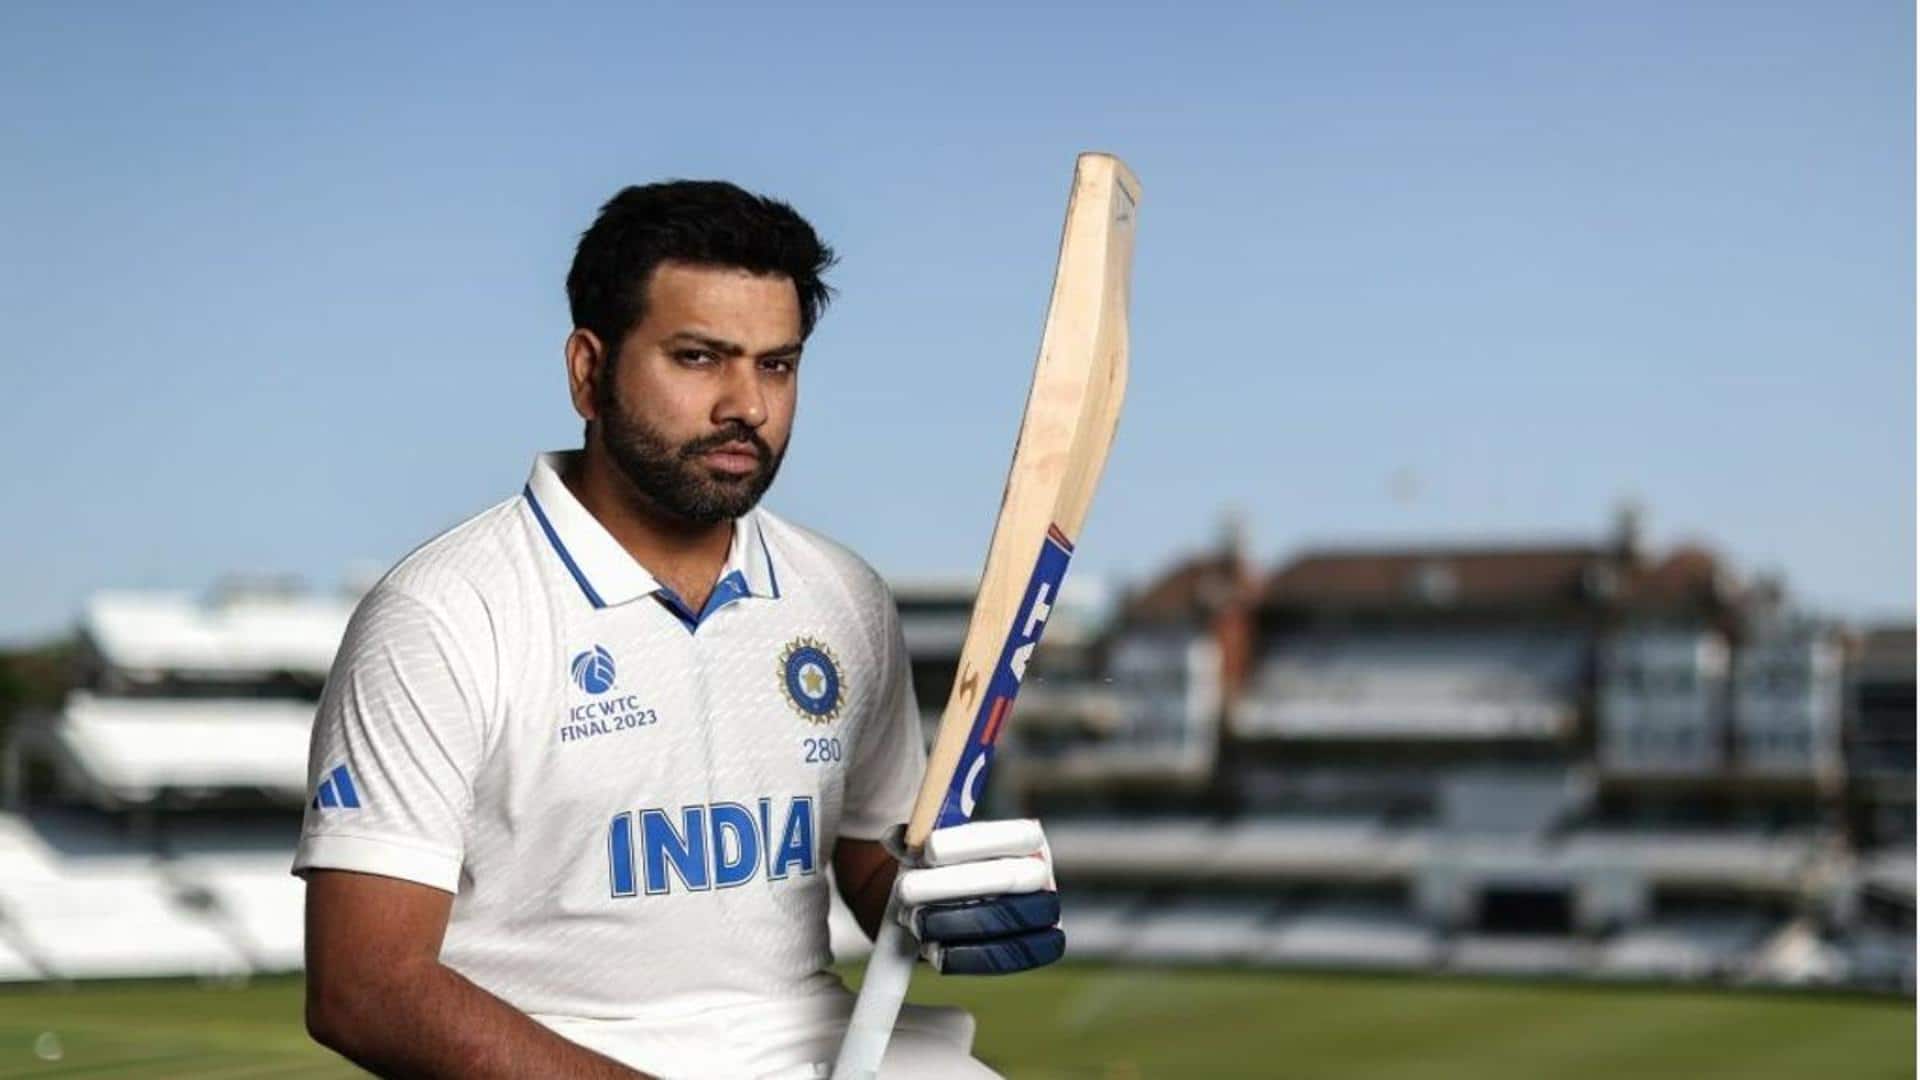 Rohit Sharma slams his second Test century overseas: Key stats